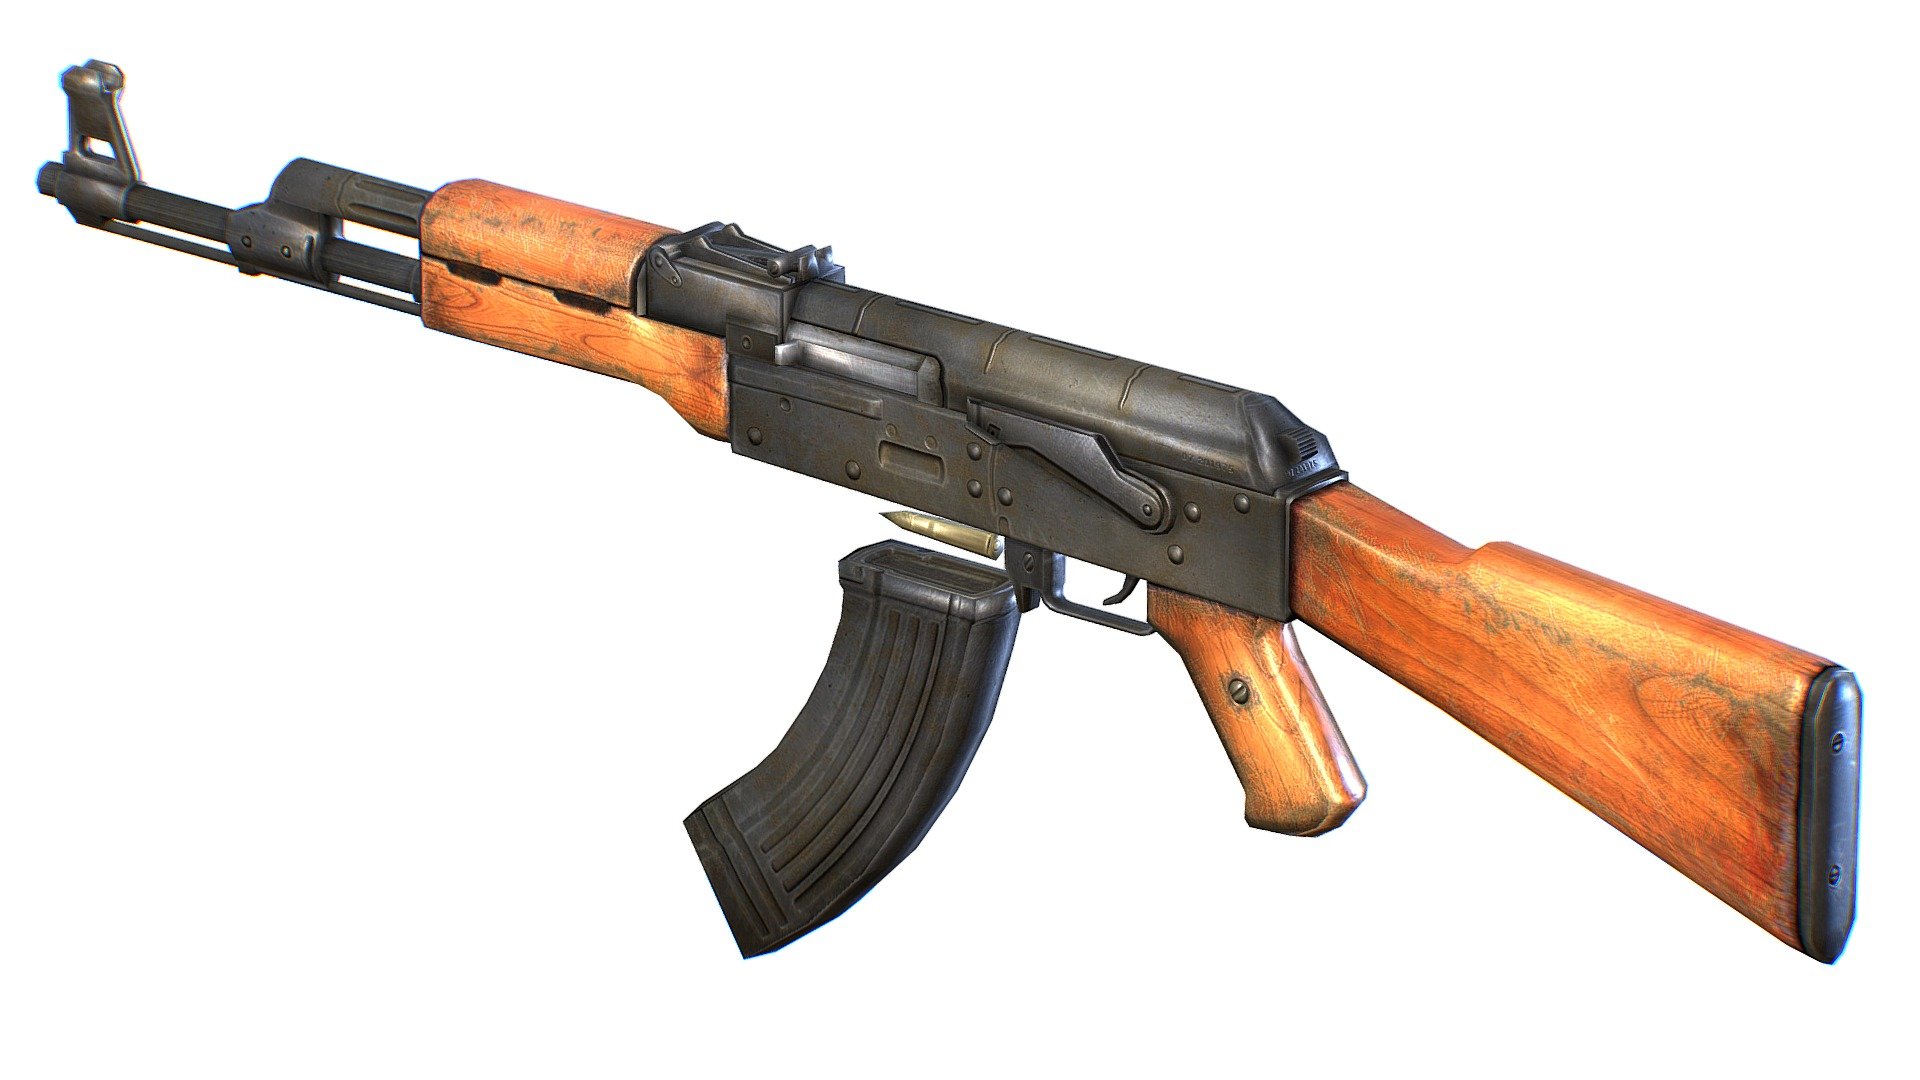 Kalashnikov Automatic Rifle  AK 47 LowPoly model - 1024x1024 textures, 3dsMaya file included 3d model